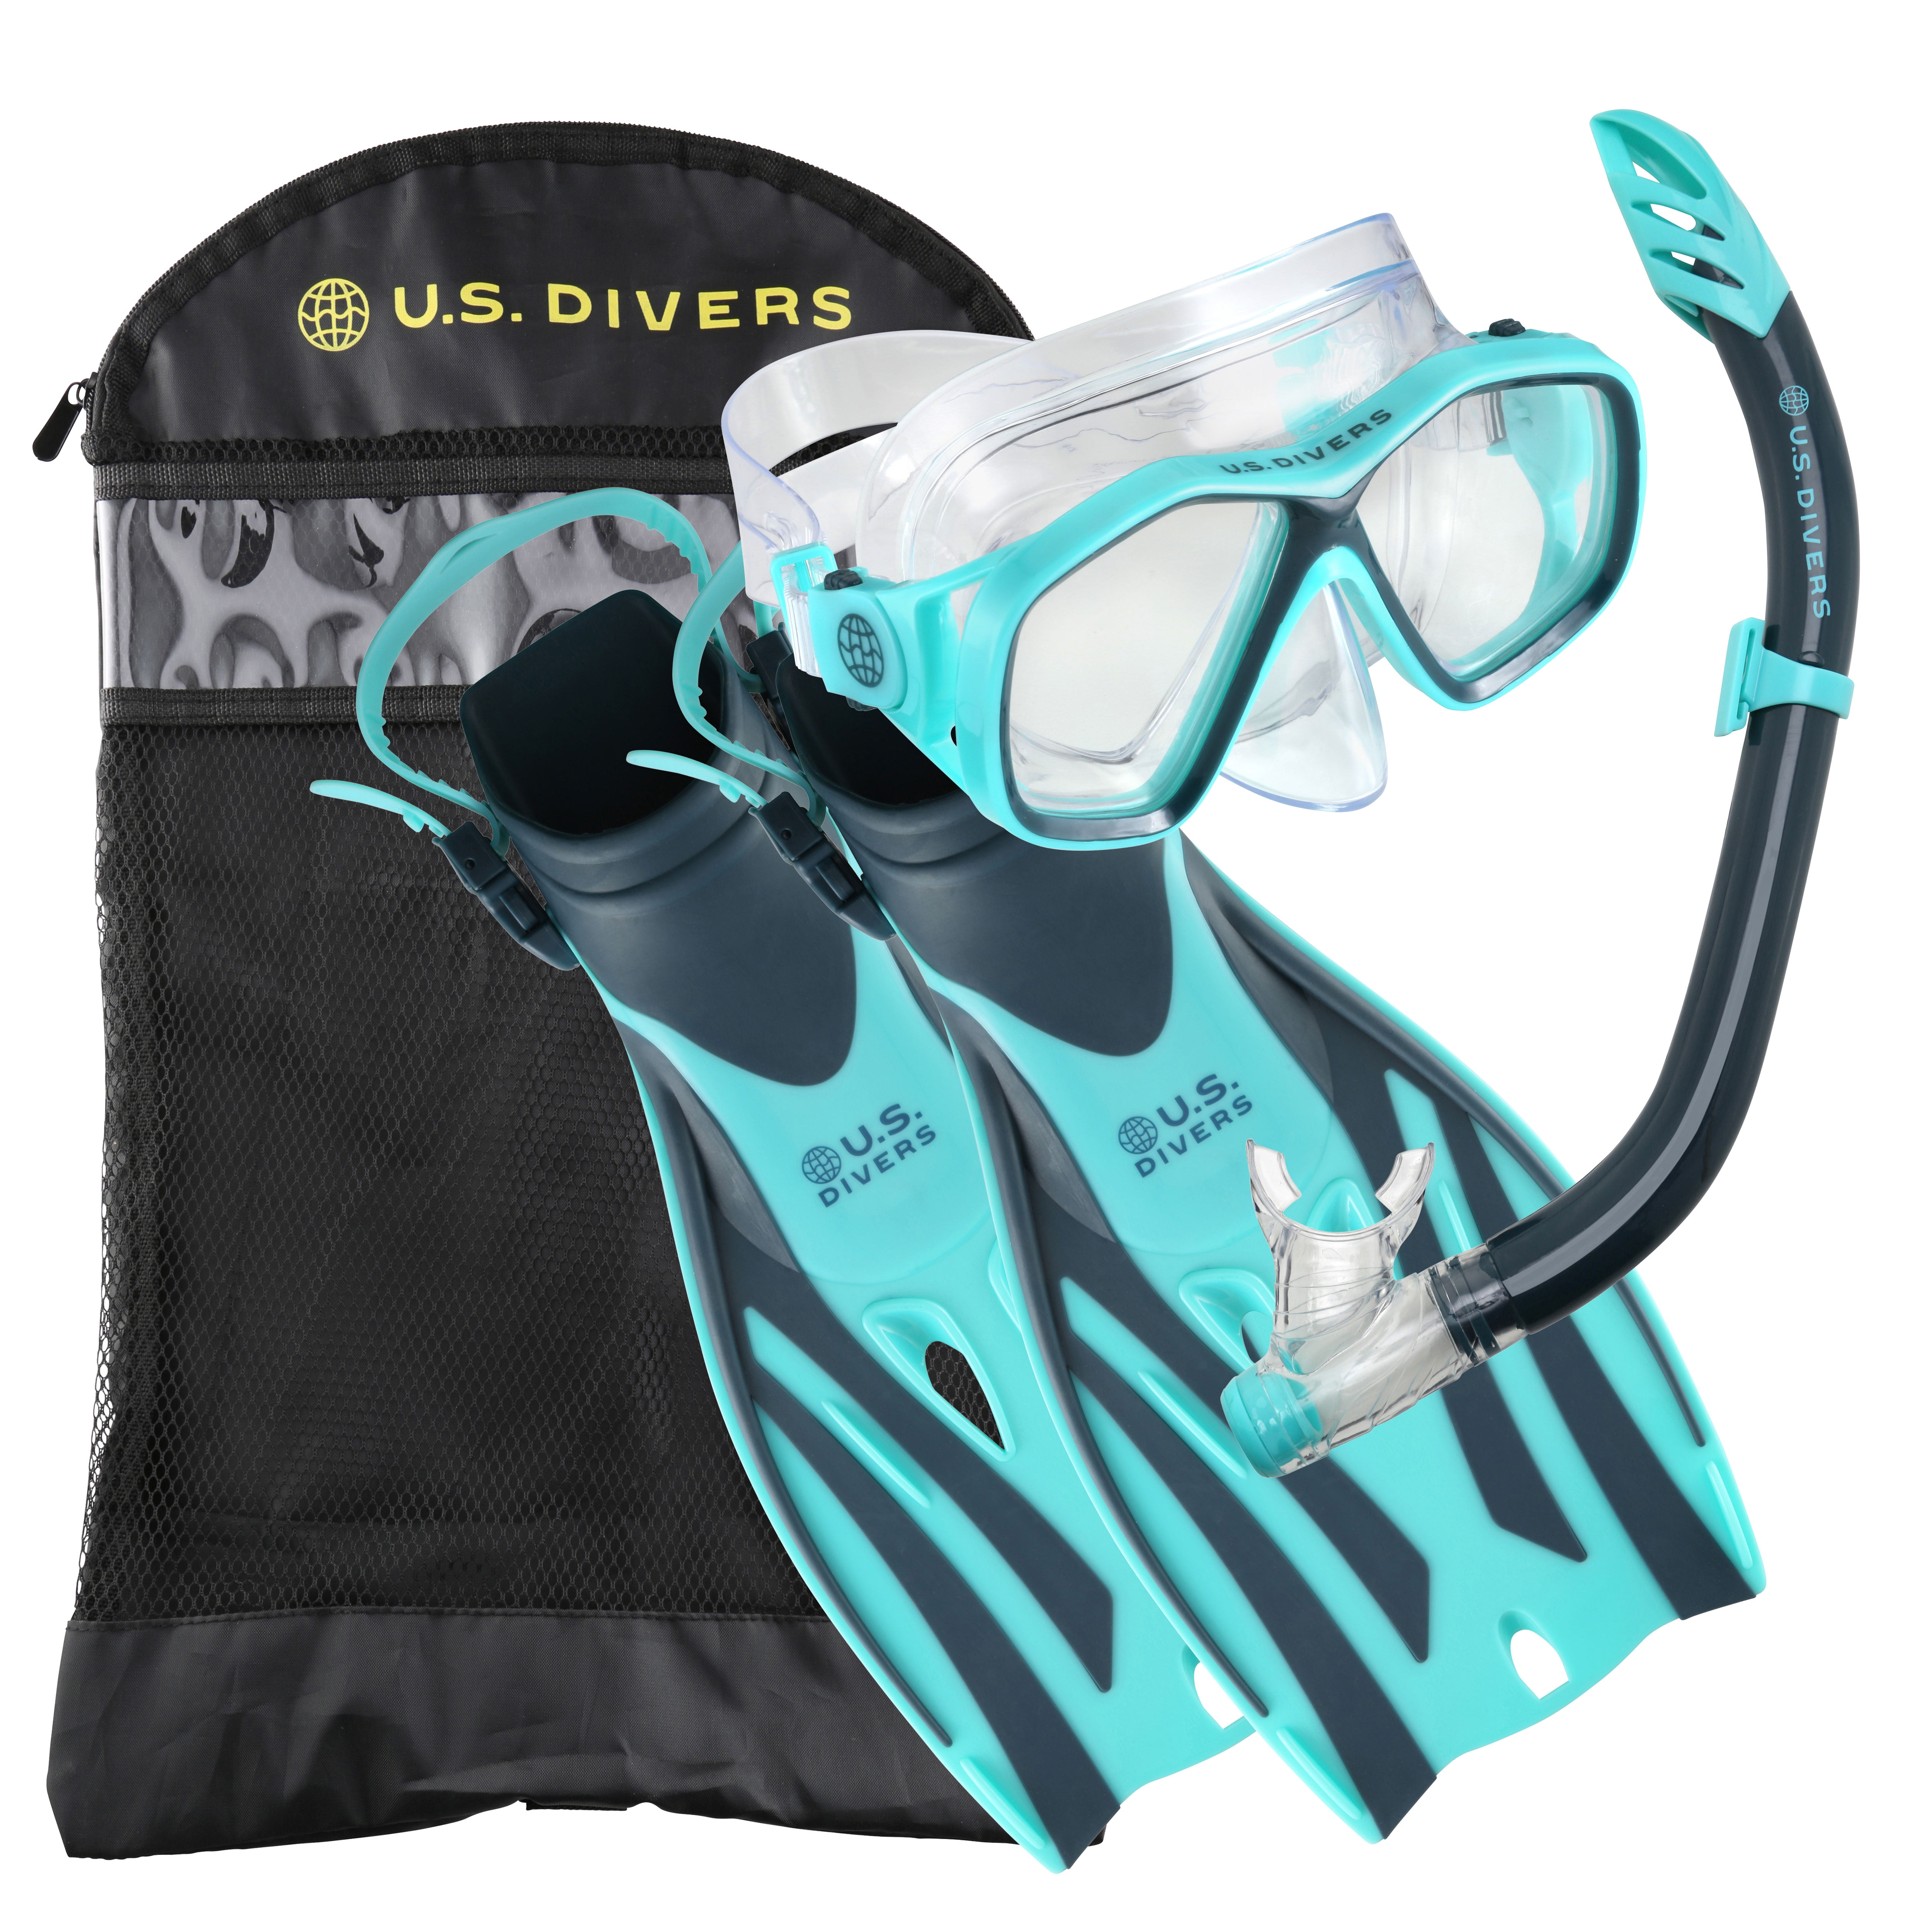 Details about   *NEW* U.S Divers Snorkel Set Blue JUNIOR 6 KIDS Large/XL size 1-4 Play Series 